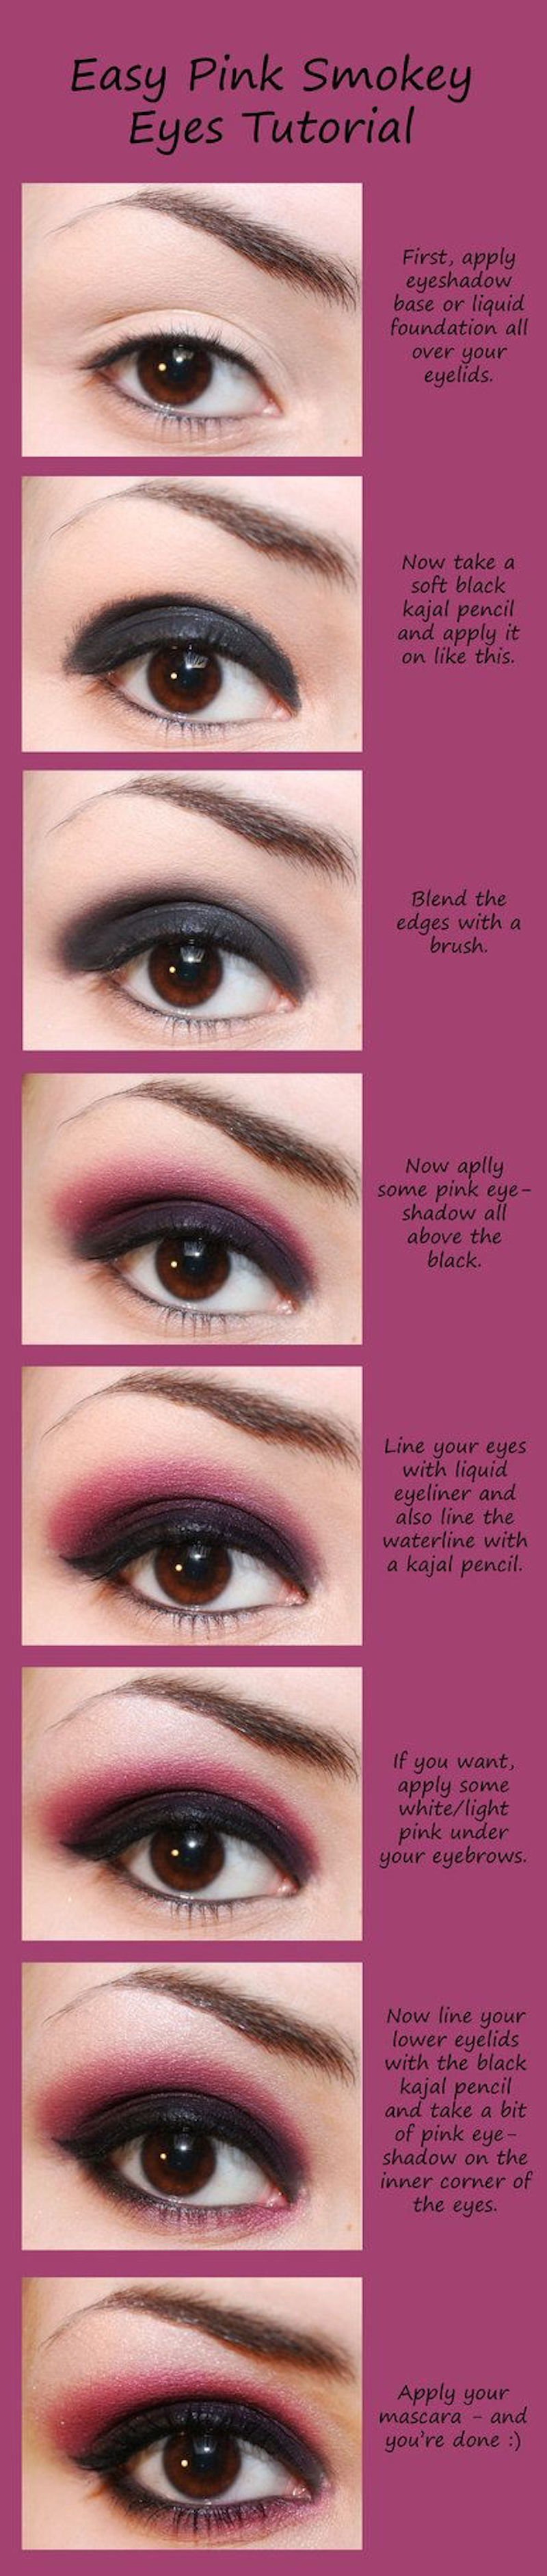 Light Silver Eye Makeup 15 Smokey Eye Tutorials Step Step Guide To Perfect Hollywood Makeup